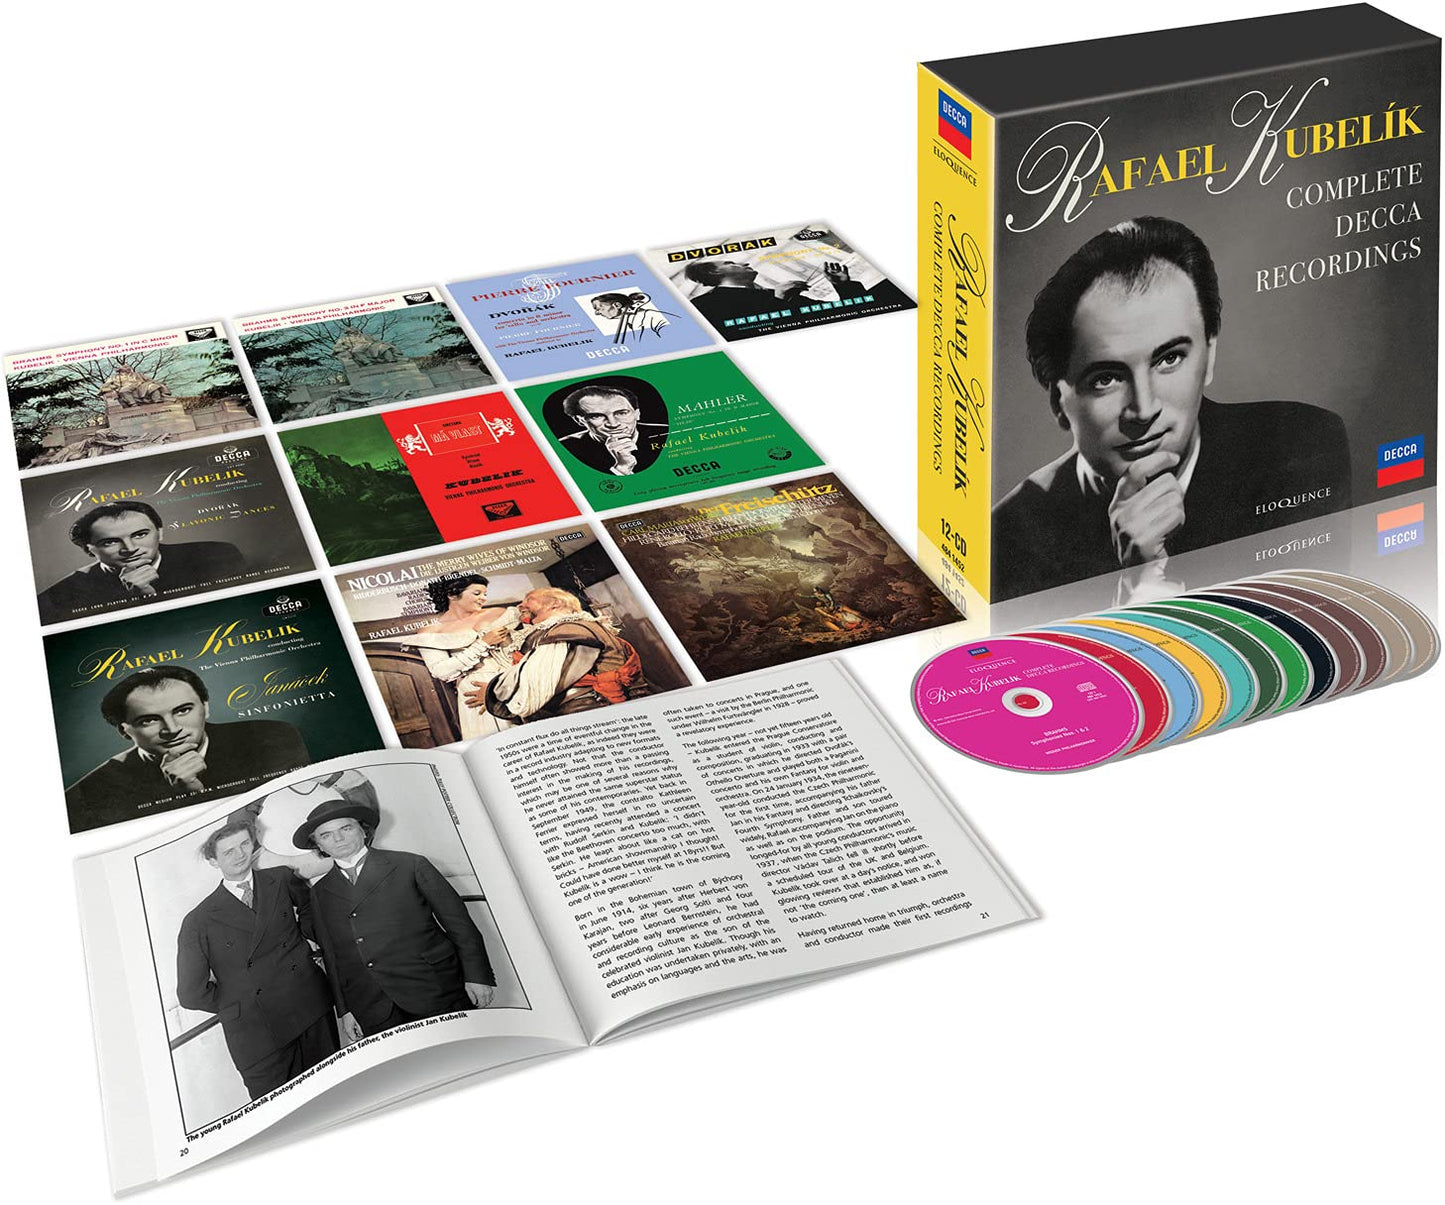 RAFAEL KUBELÍK – The Complete Decca Recordings (12 CDS)